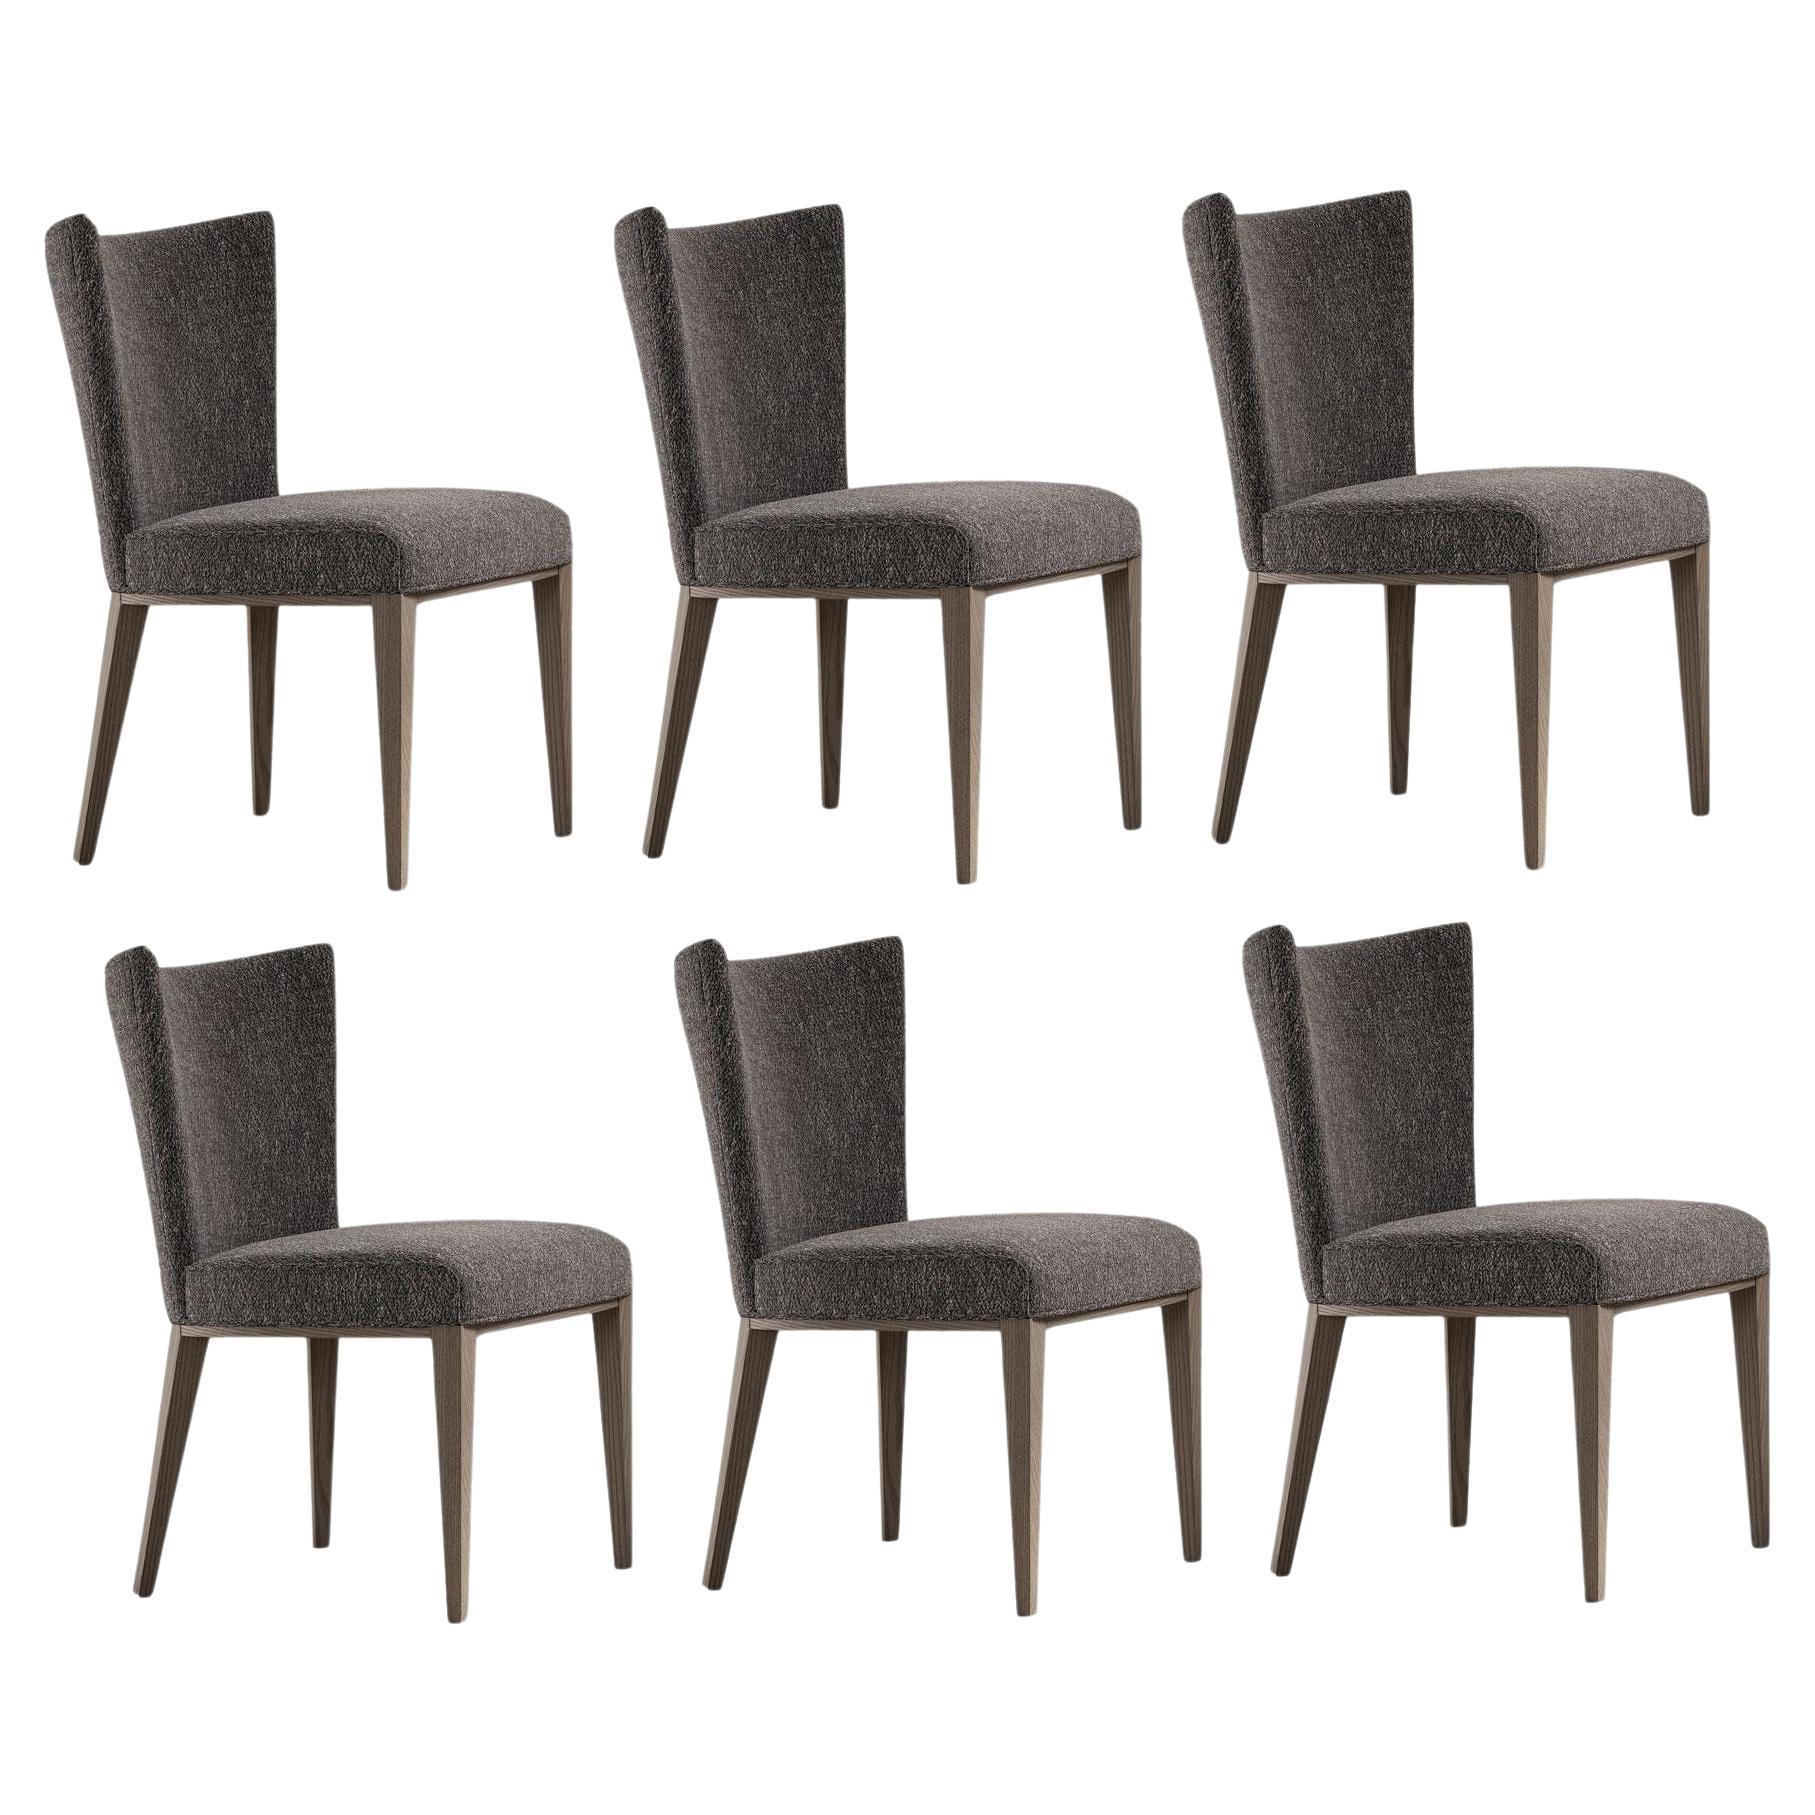 6er-Set Contemporary Dining Chairs gepolstert in raffiniertem Melange-Stoff